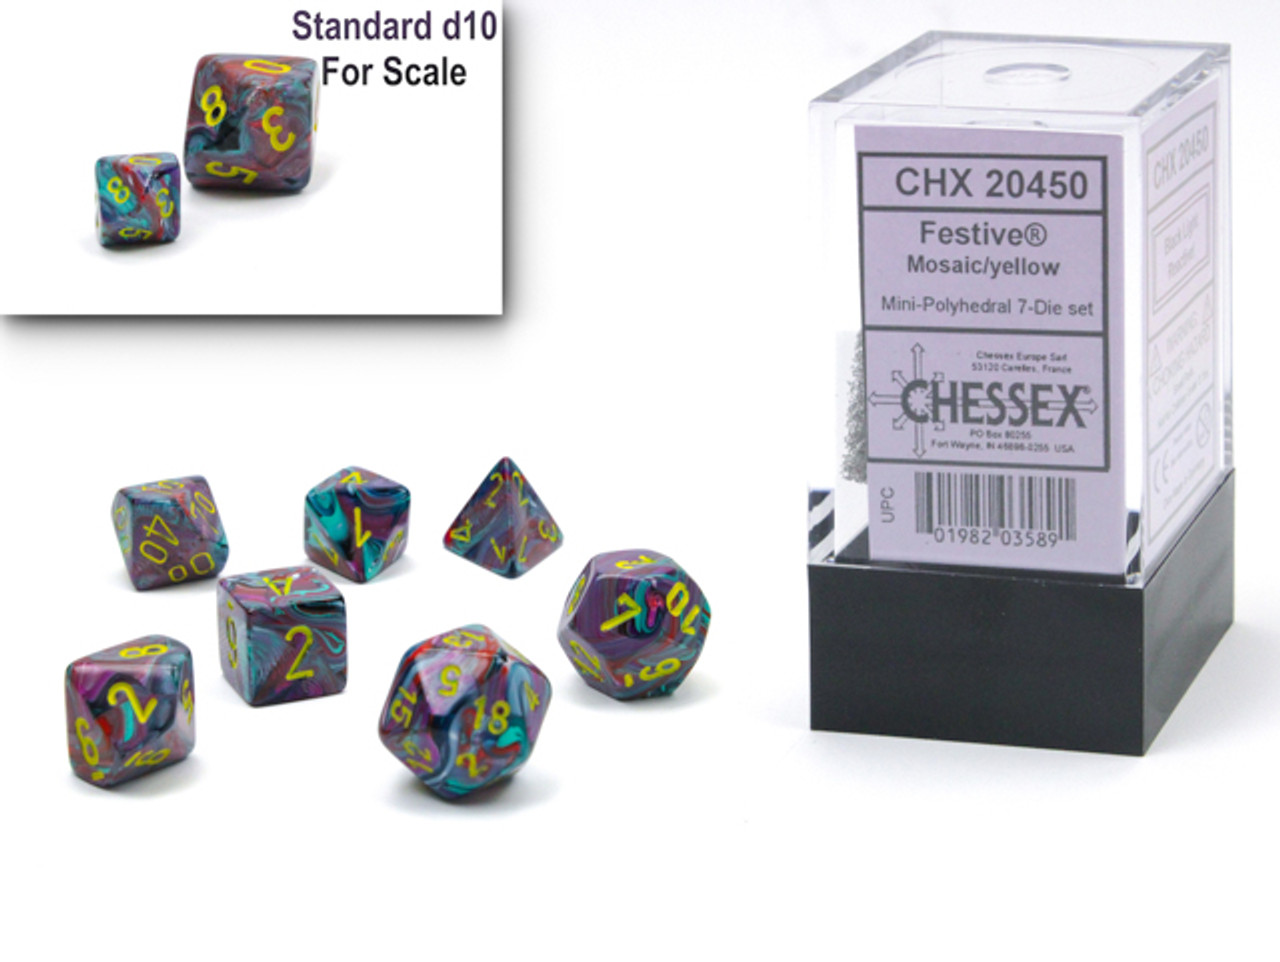 20450 - Festive® Mini-Polyhedral Mosaic/yellow 7-Die set